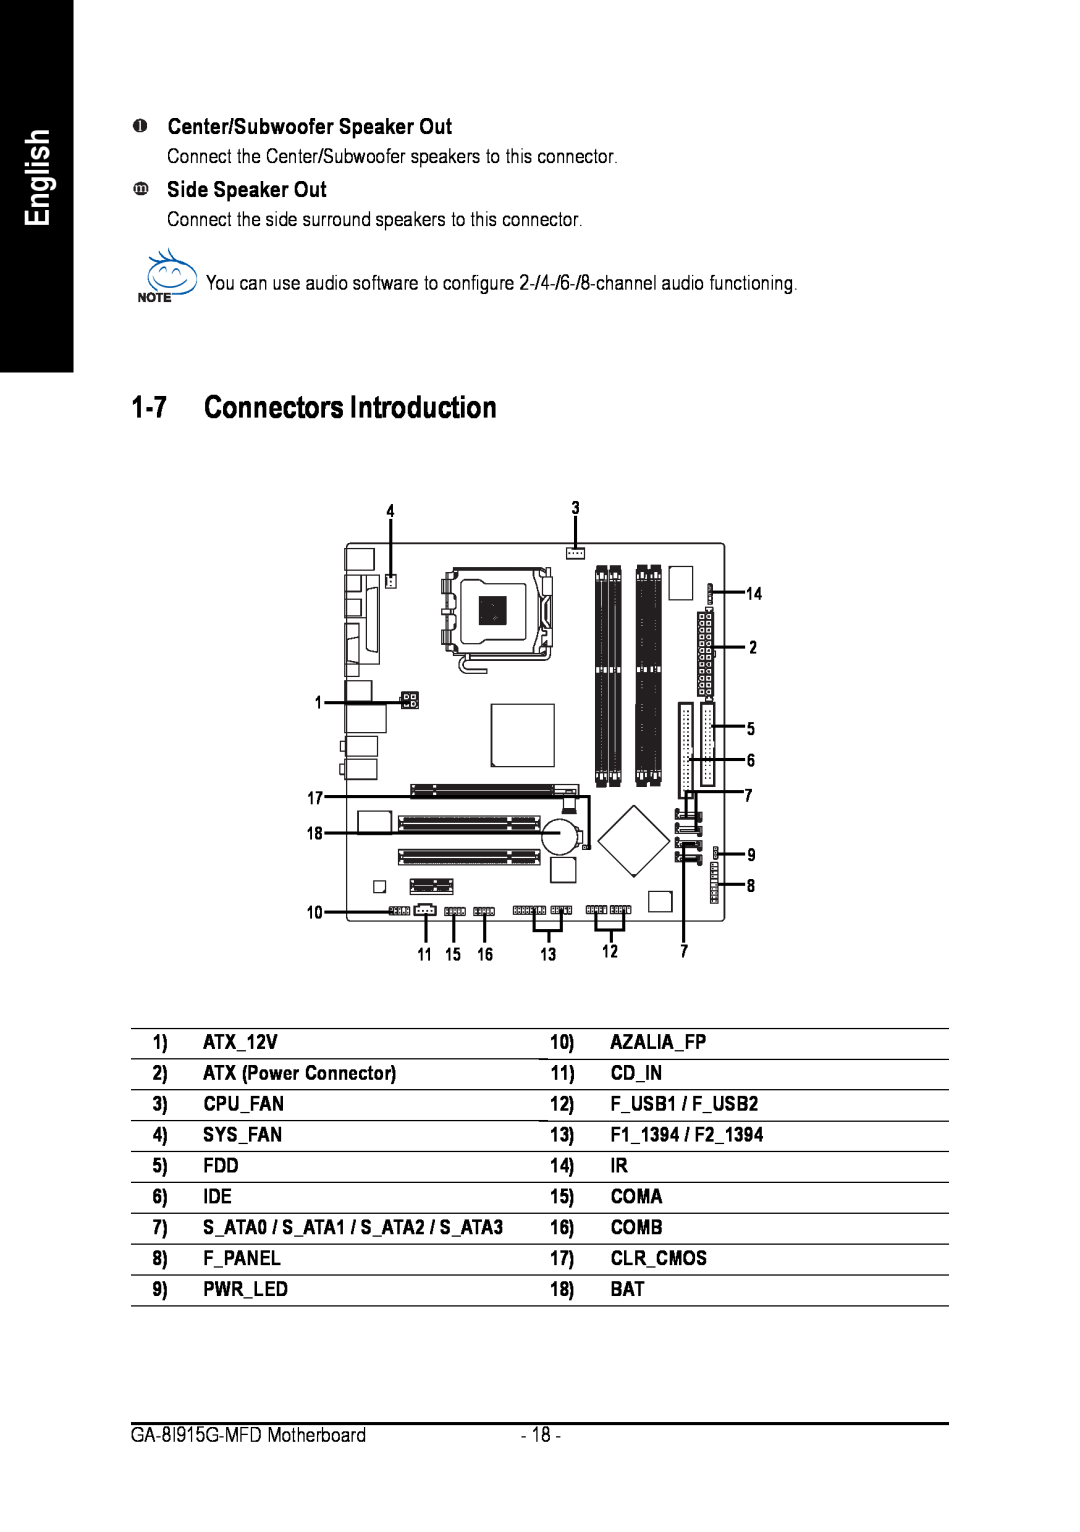 Intel GA-8I915G-MFD user manual 1-7Connectors Introduction, Center/Subwoofer Speaker Out, Side Speaker Out, English 